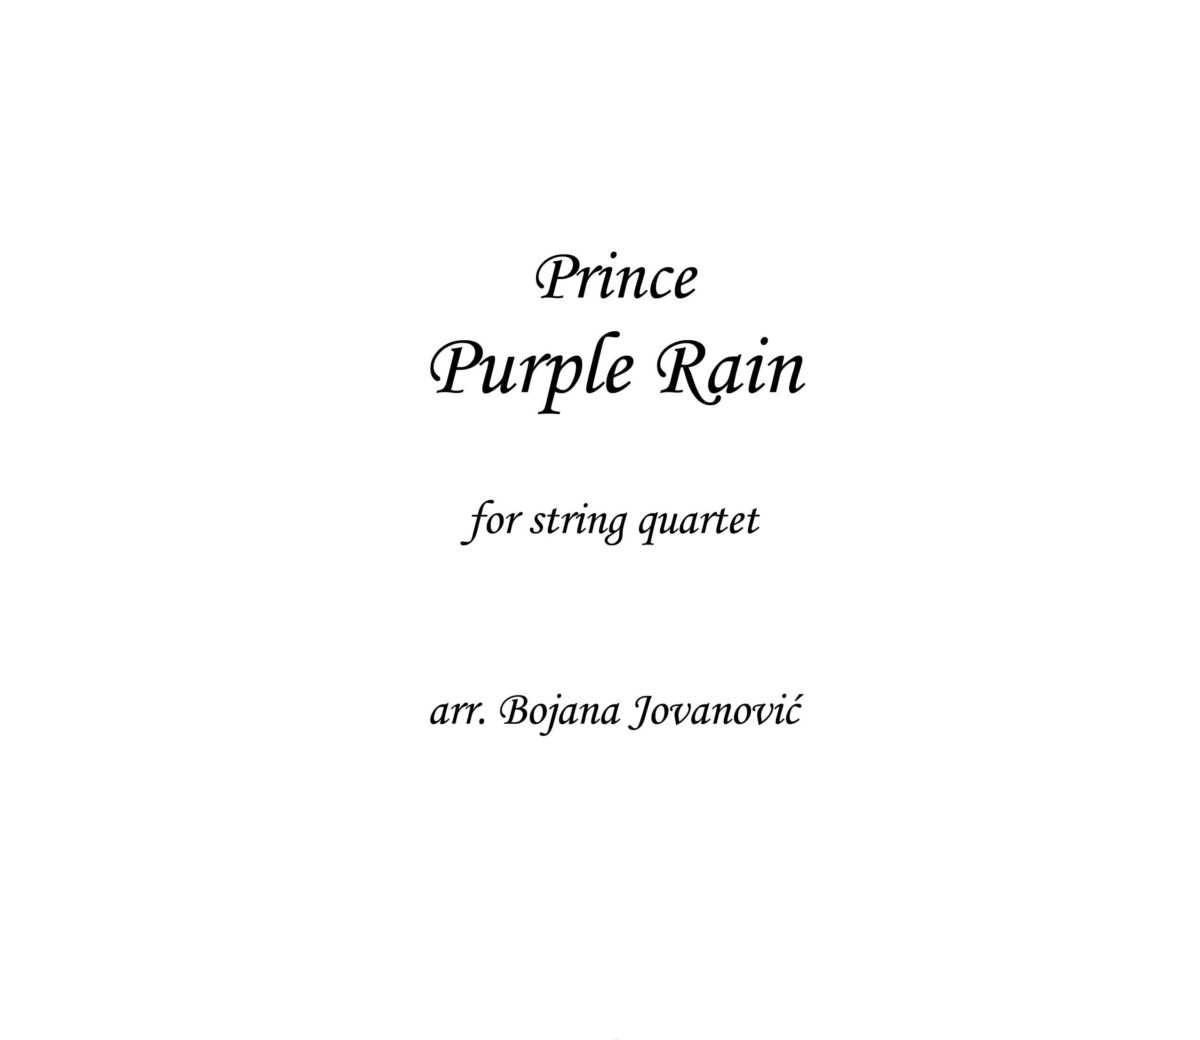 Purple Rain (Prince) - Sheet Music